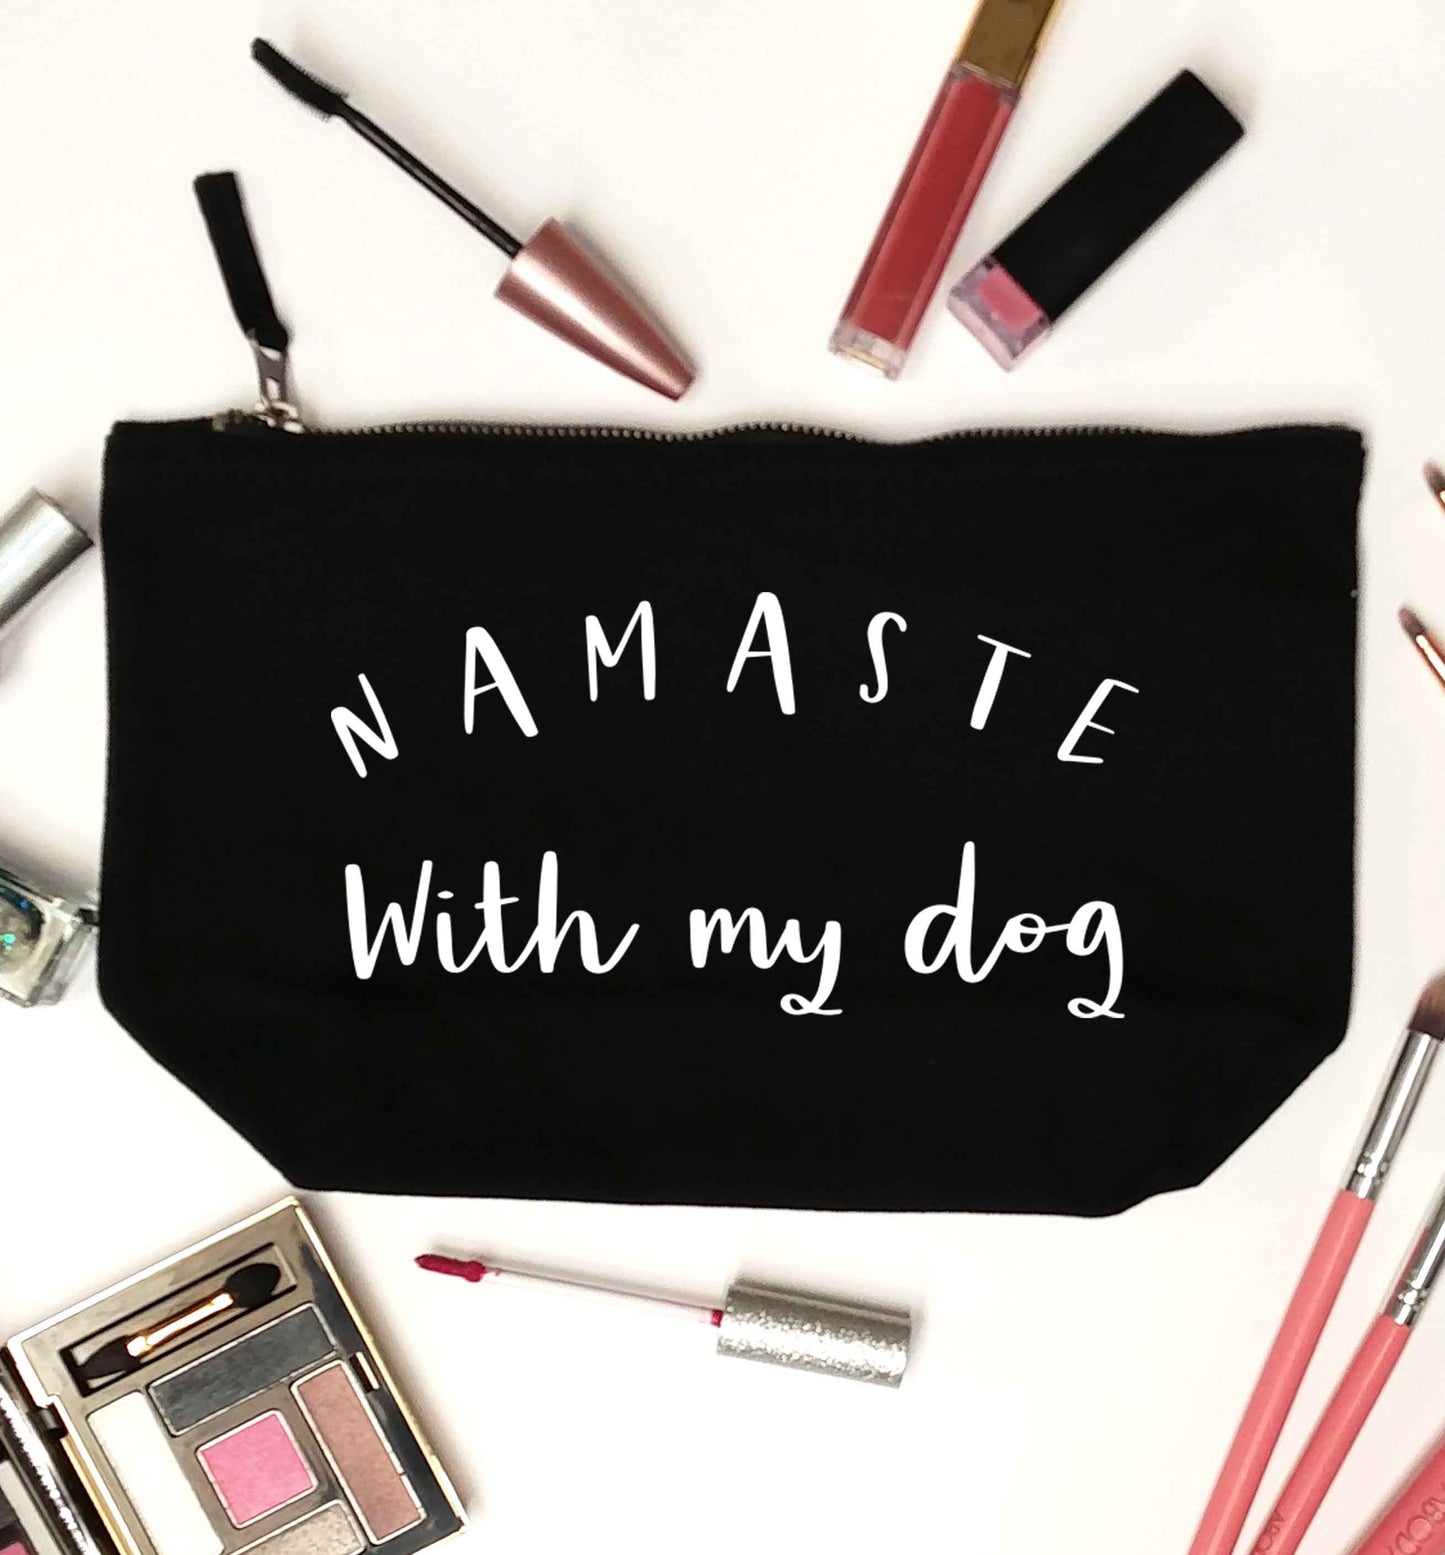 Namaste with my dog black makeup bag